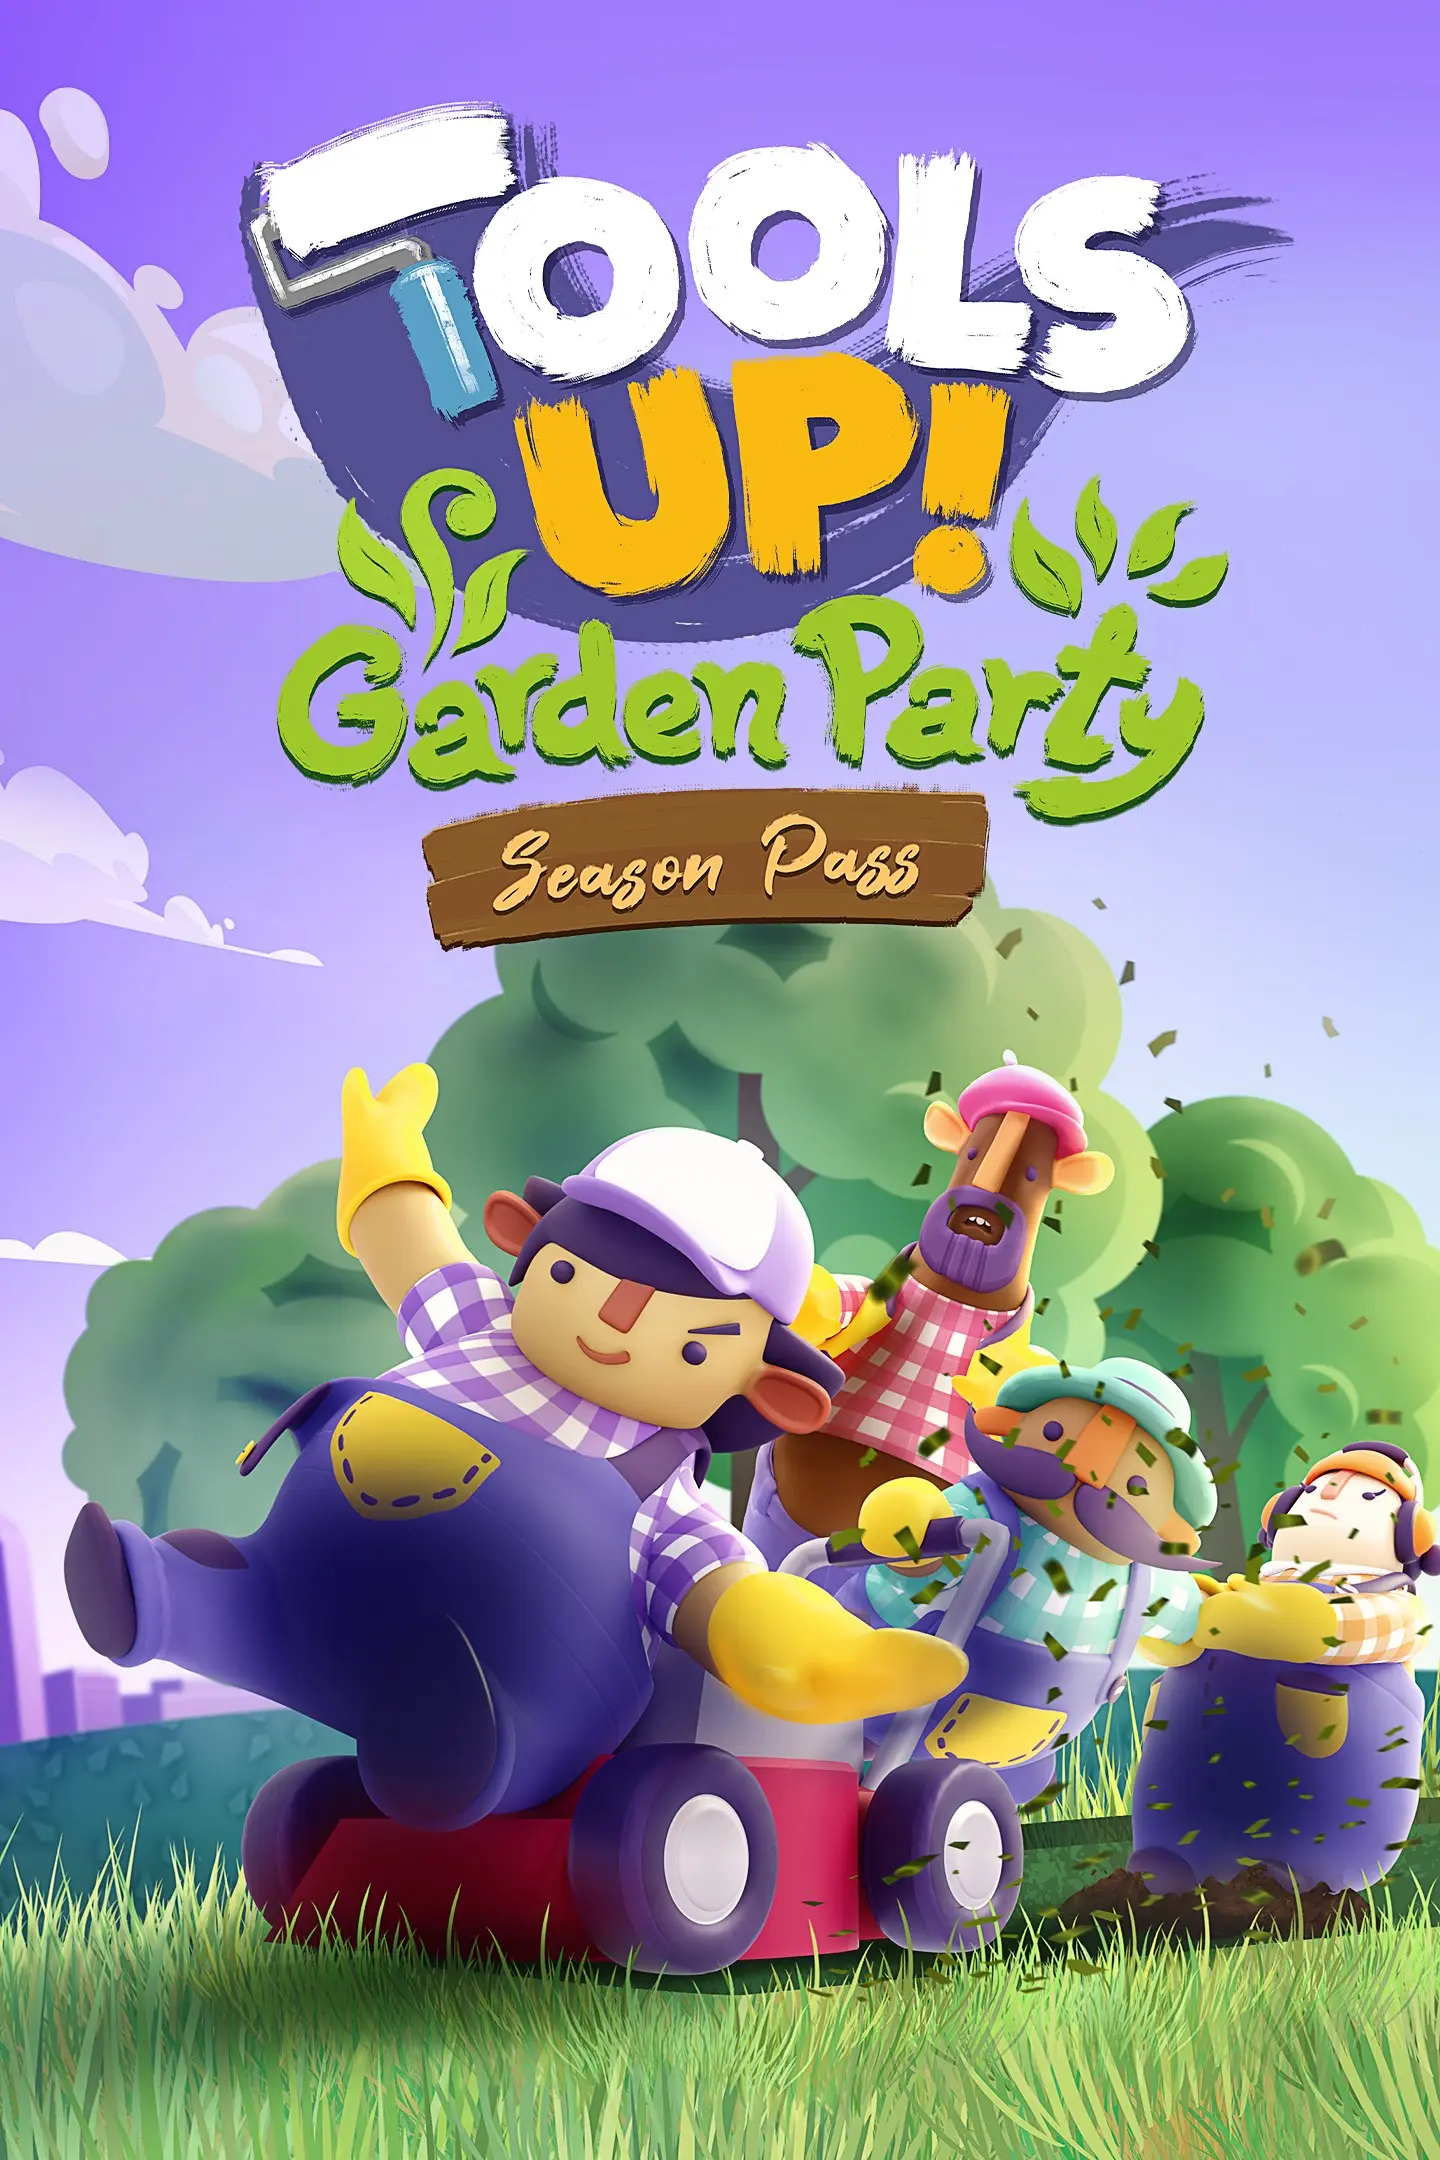 Tools Up! Garden Party - Season Pass DLC (PC) - Steam - Digital Code